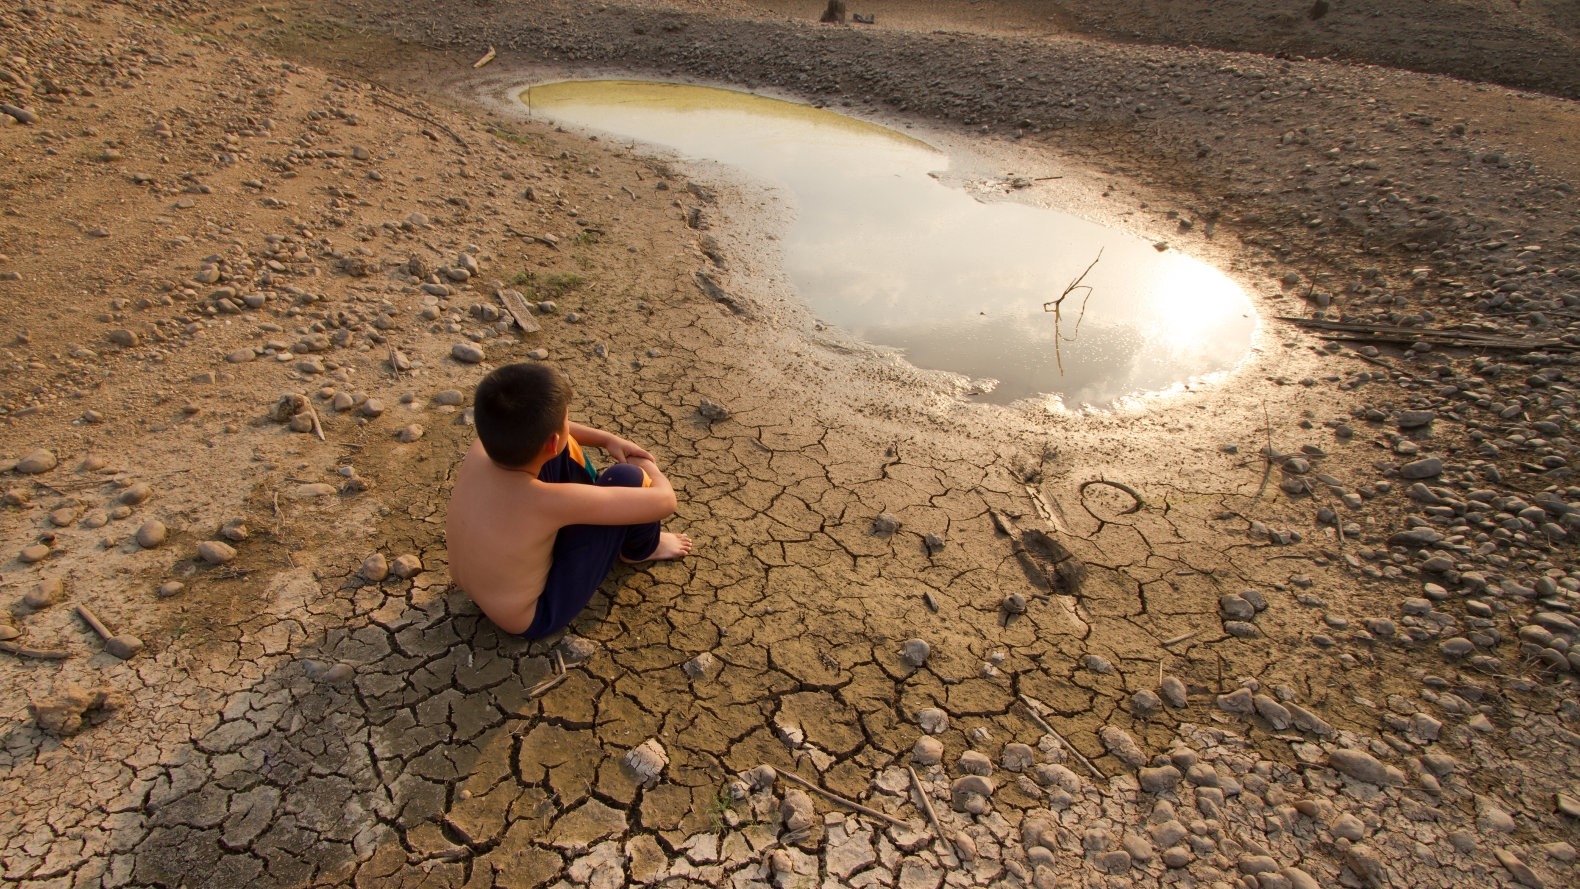 2050 yılında Dünya nüfusunun yarısı kalabilir olmadan, tatlı su